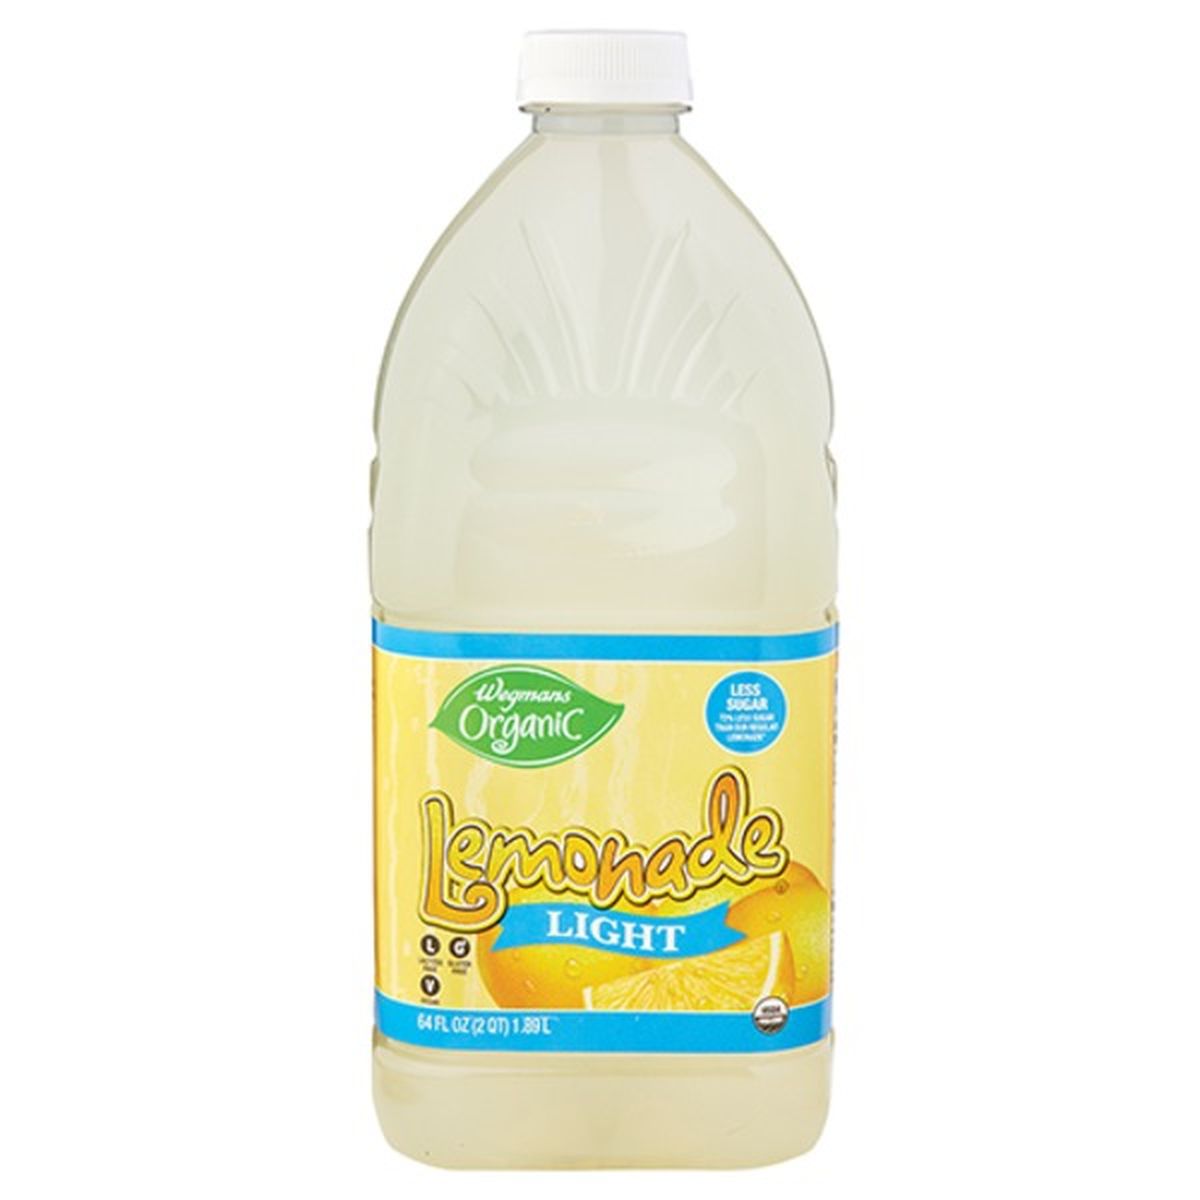 Calories in Wegmans Organic Light Lemonade